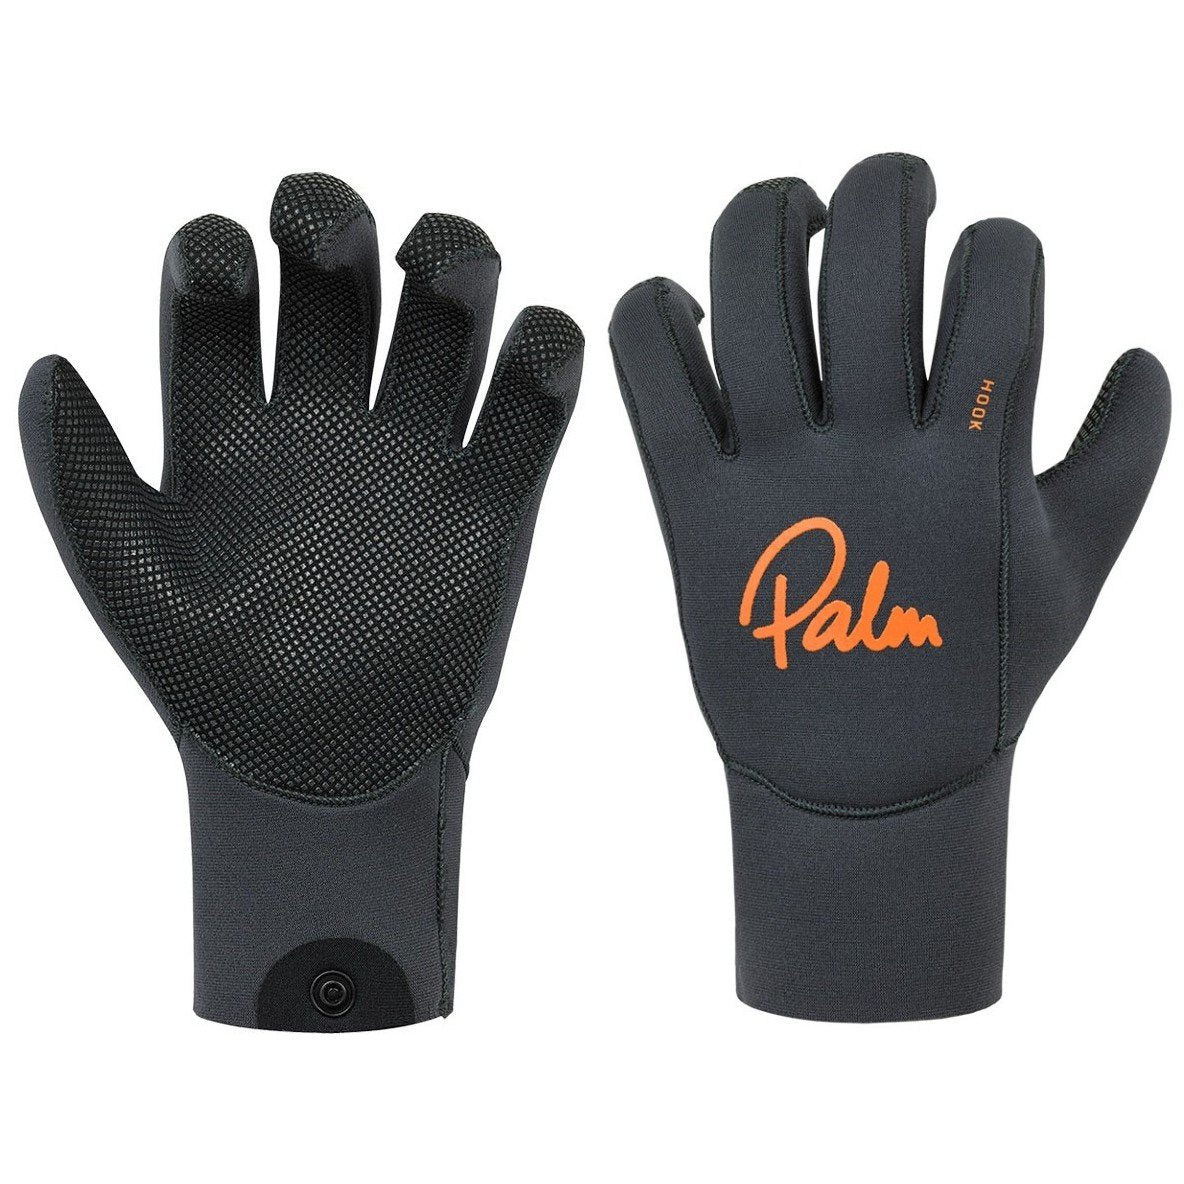 Buy Palm Hook Paddling Gloves